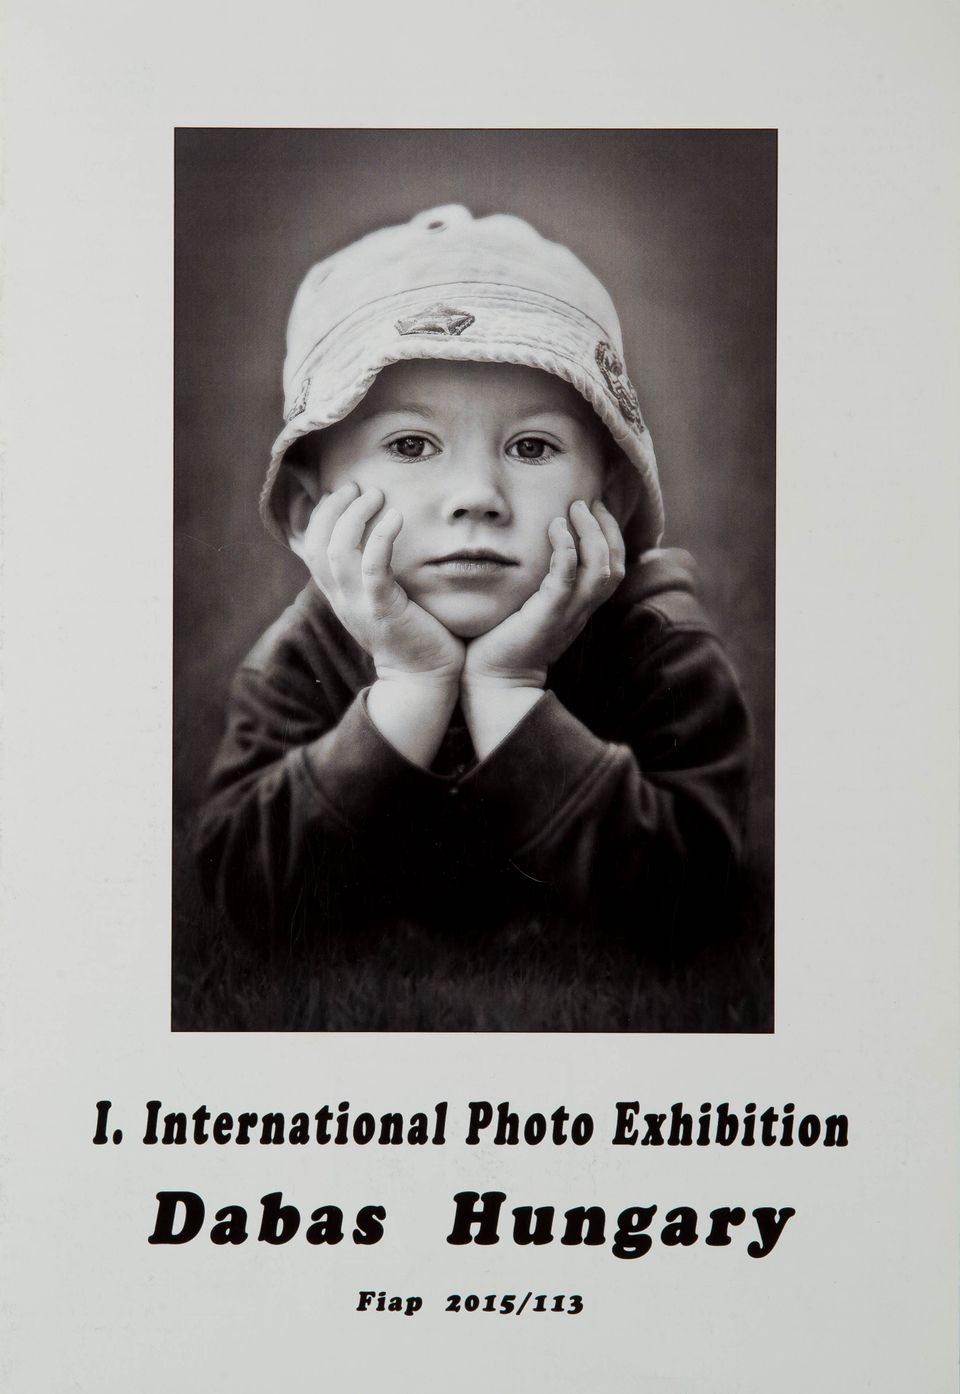 1. International Photo Exhibition Dadas Hungary